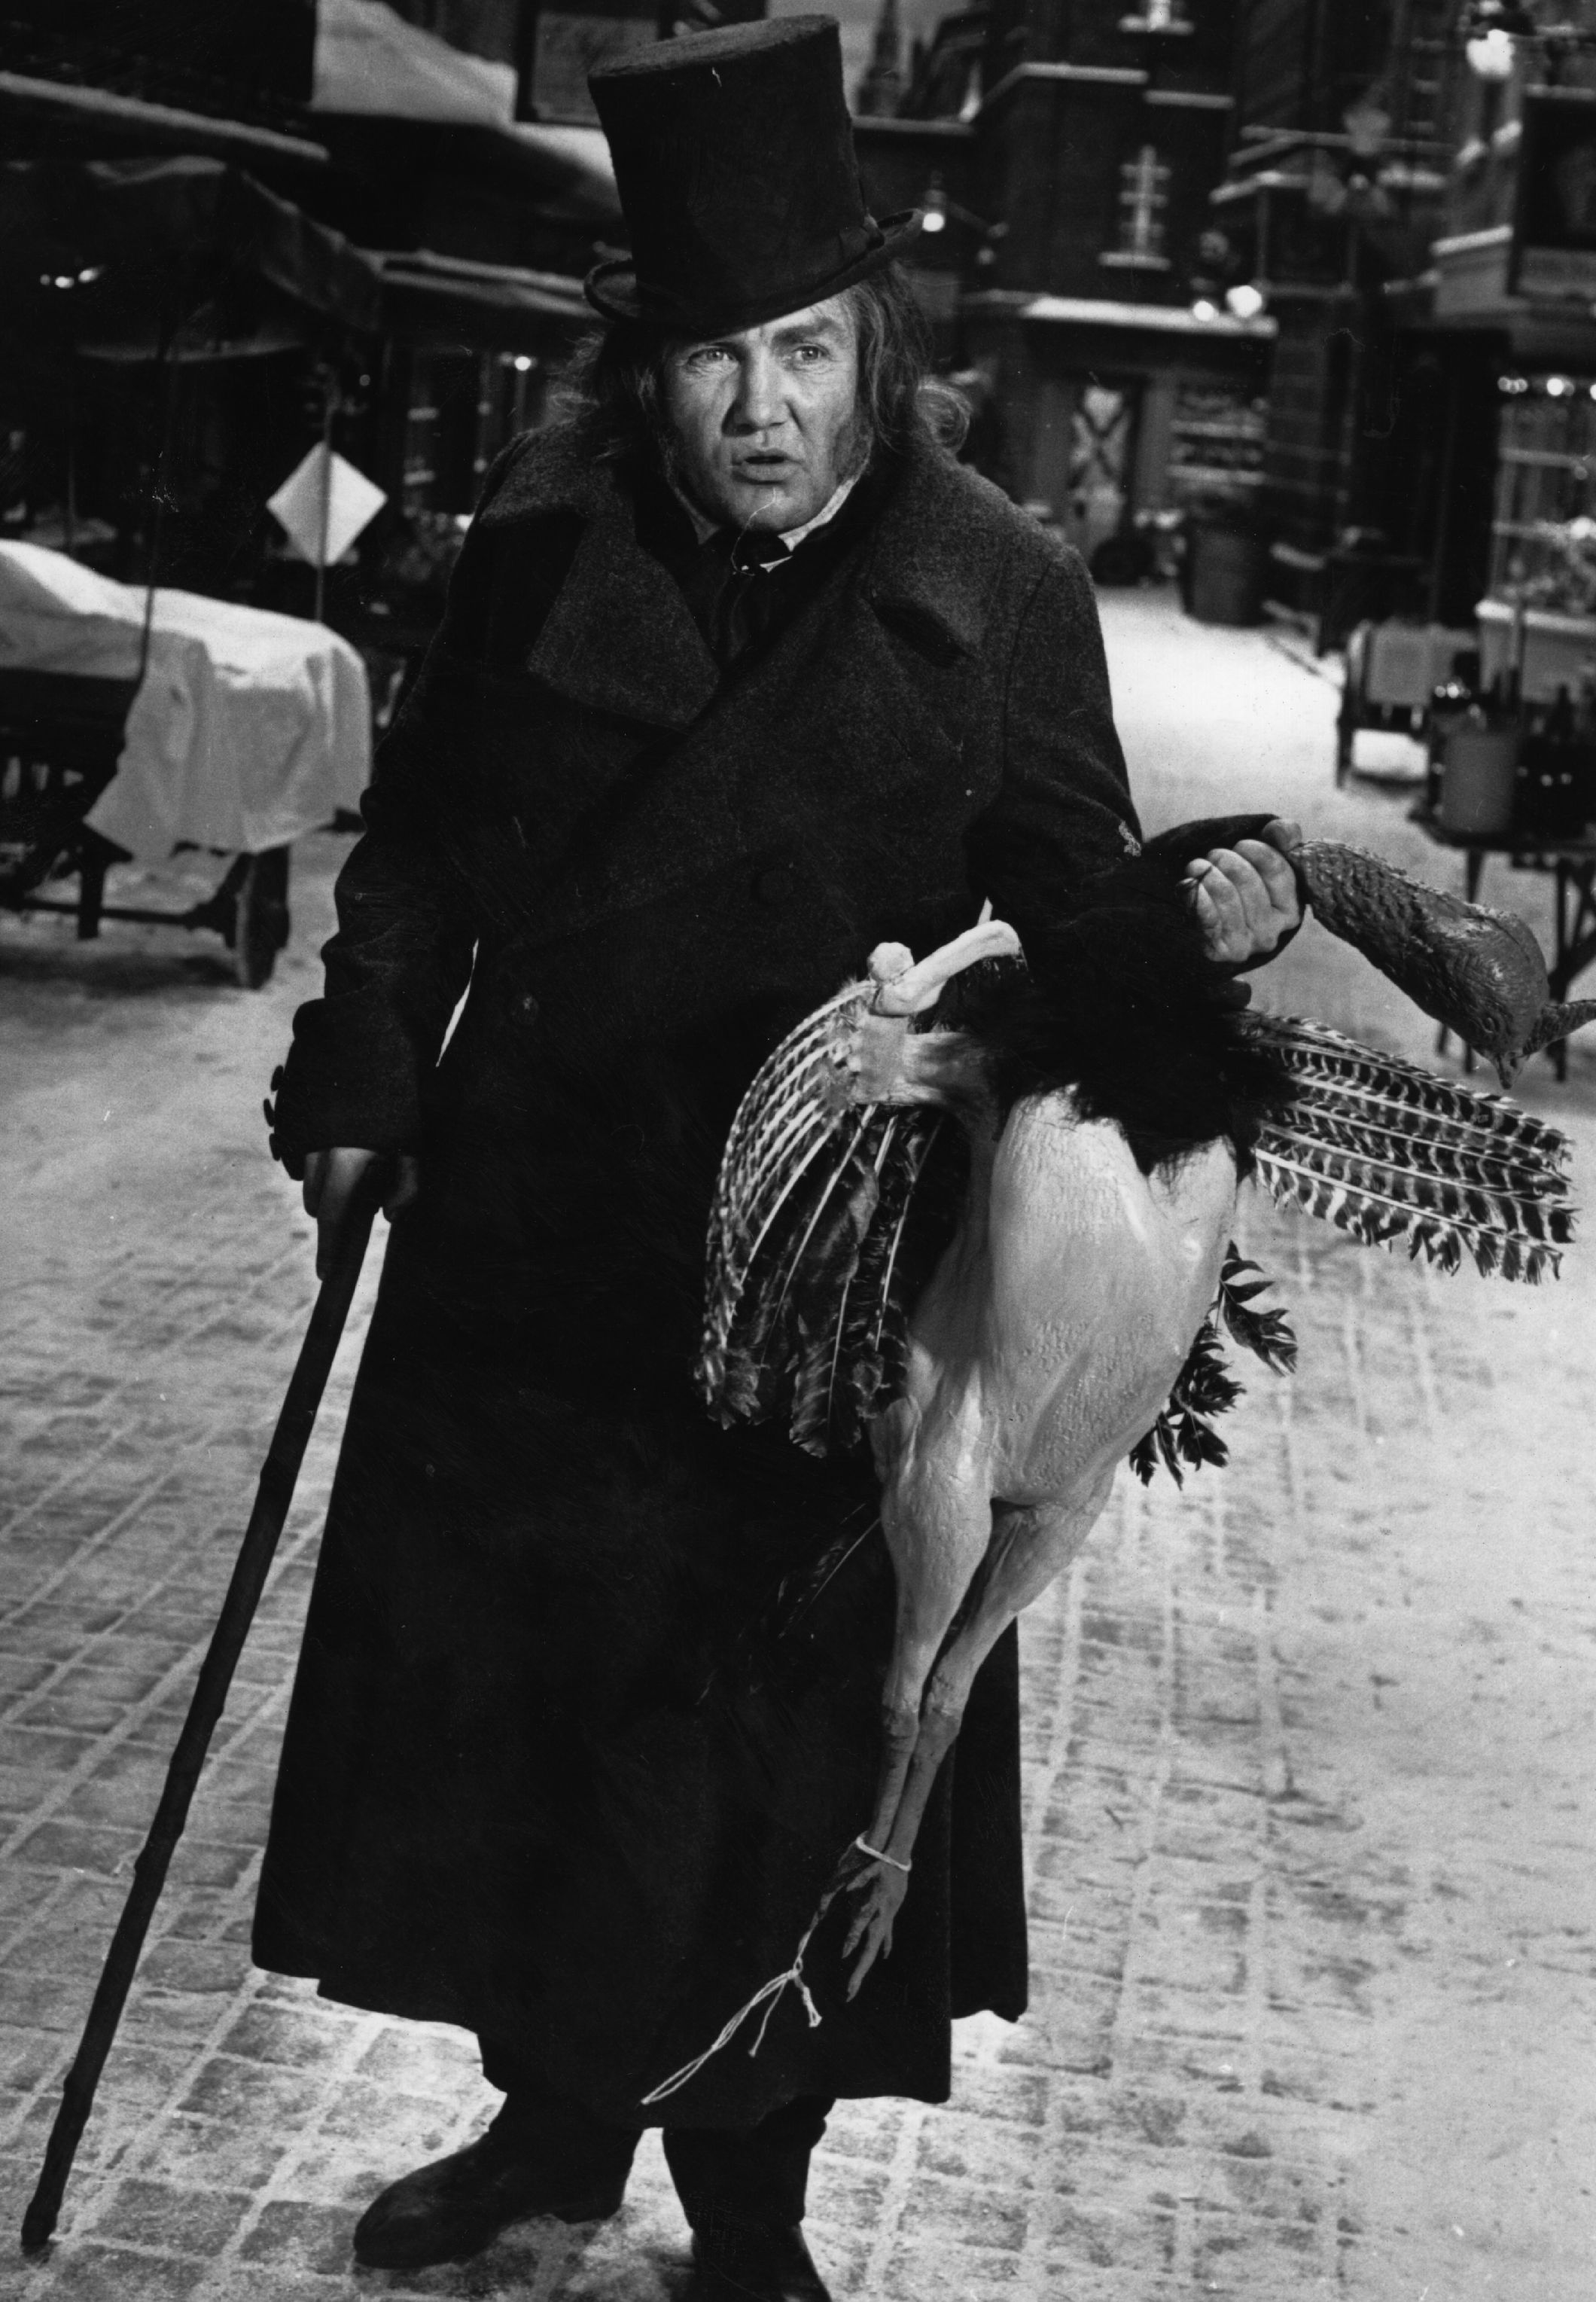 Actor Albert Finney as Ebenezer Scrooge